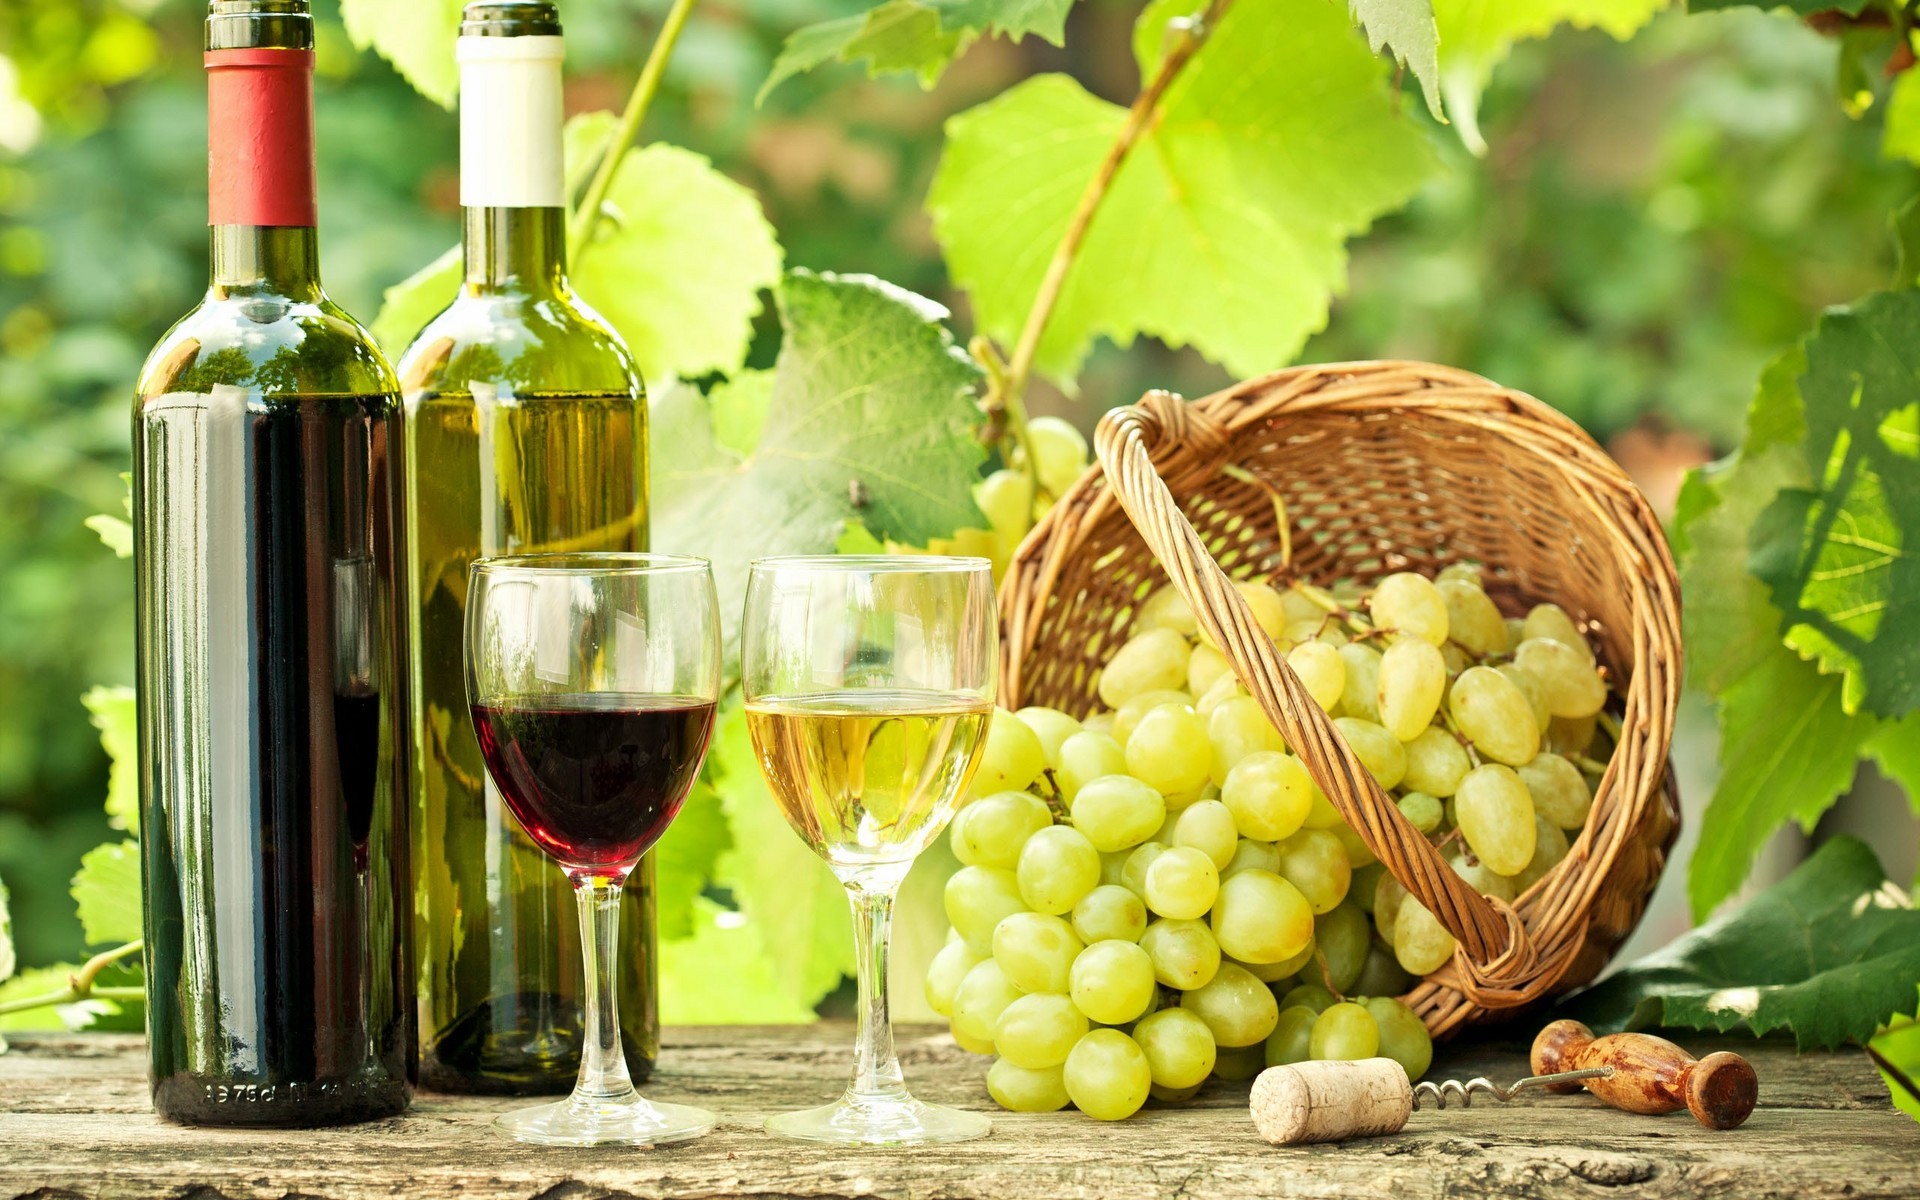 Wine Drink Grapes Food Bottles Alcohol Leaves Plants Red Wine White Wine Cork Bottle Opener Cane Bas 1920x1200